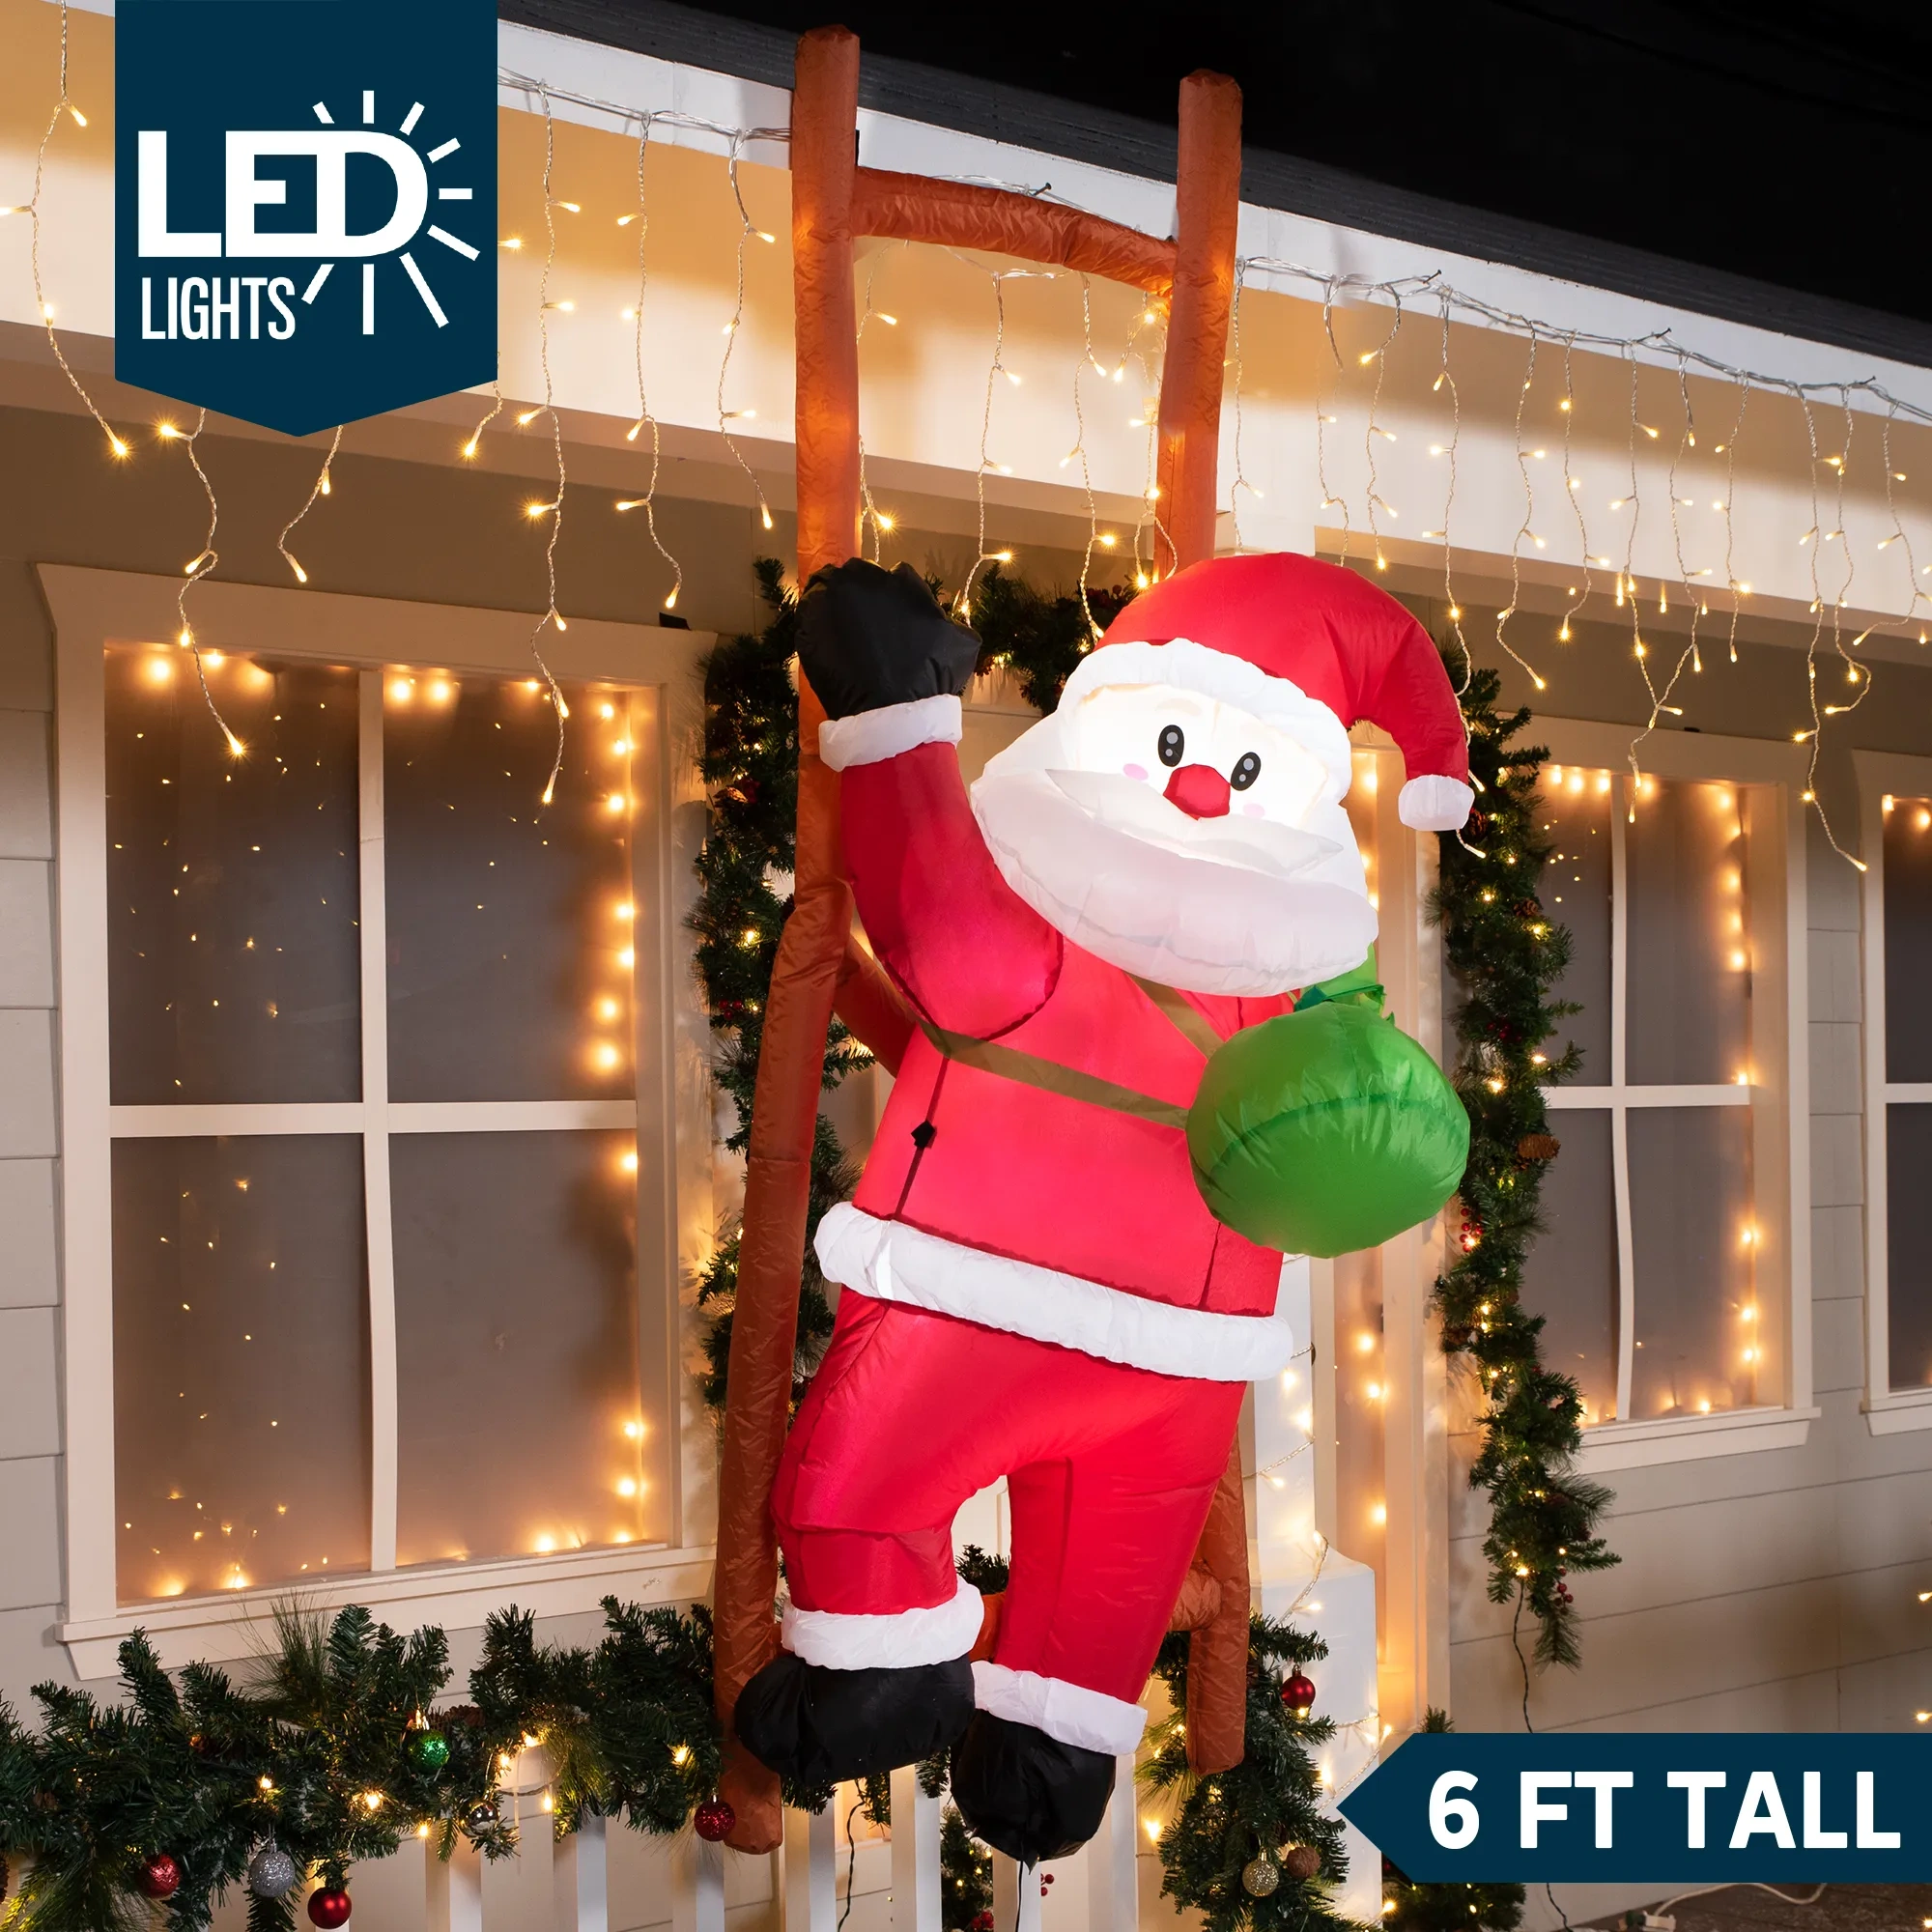 6ft Tall LED Inflatable Climbing Santa Decoration